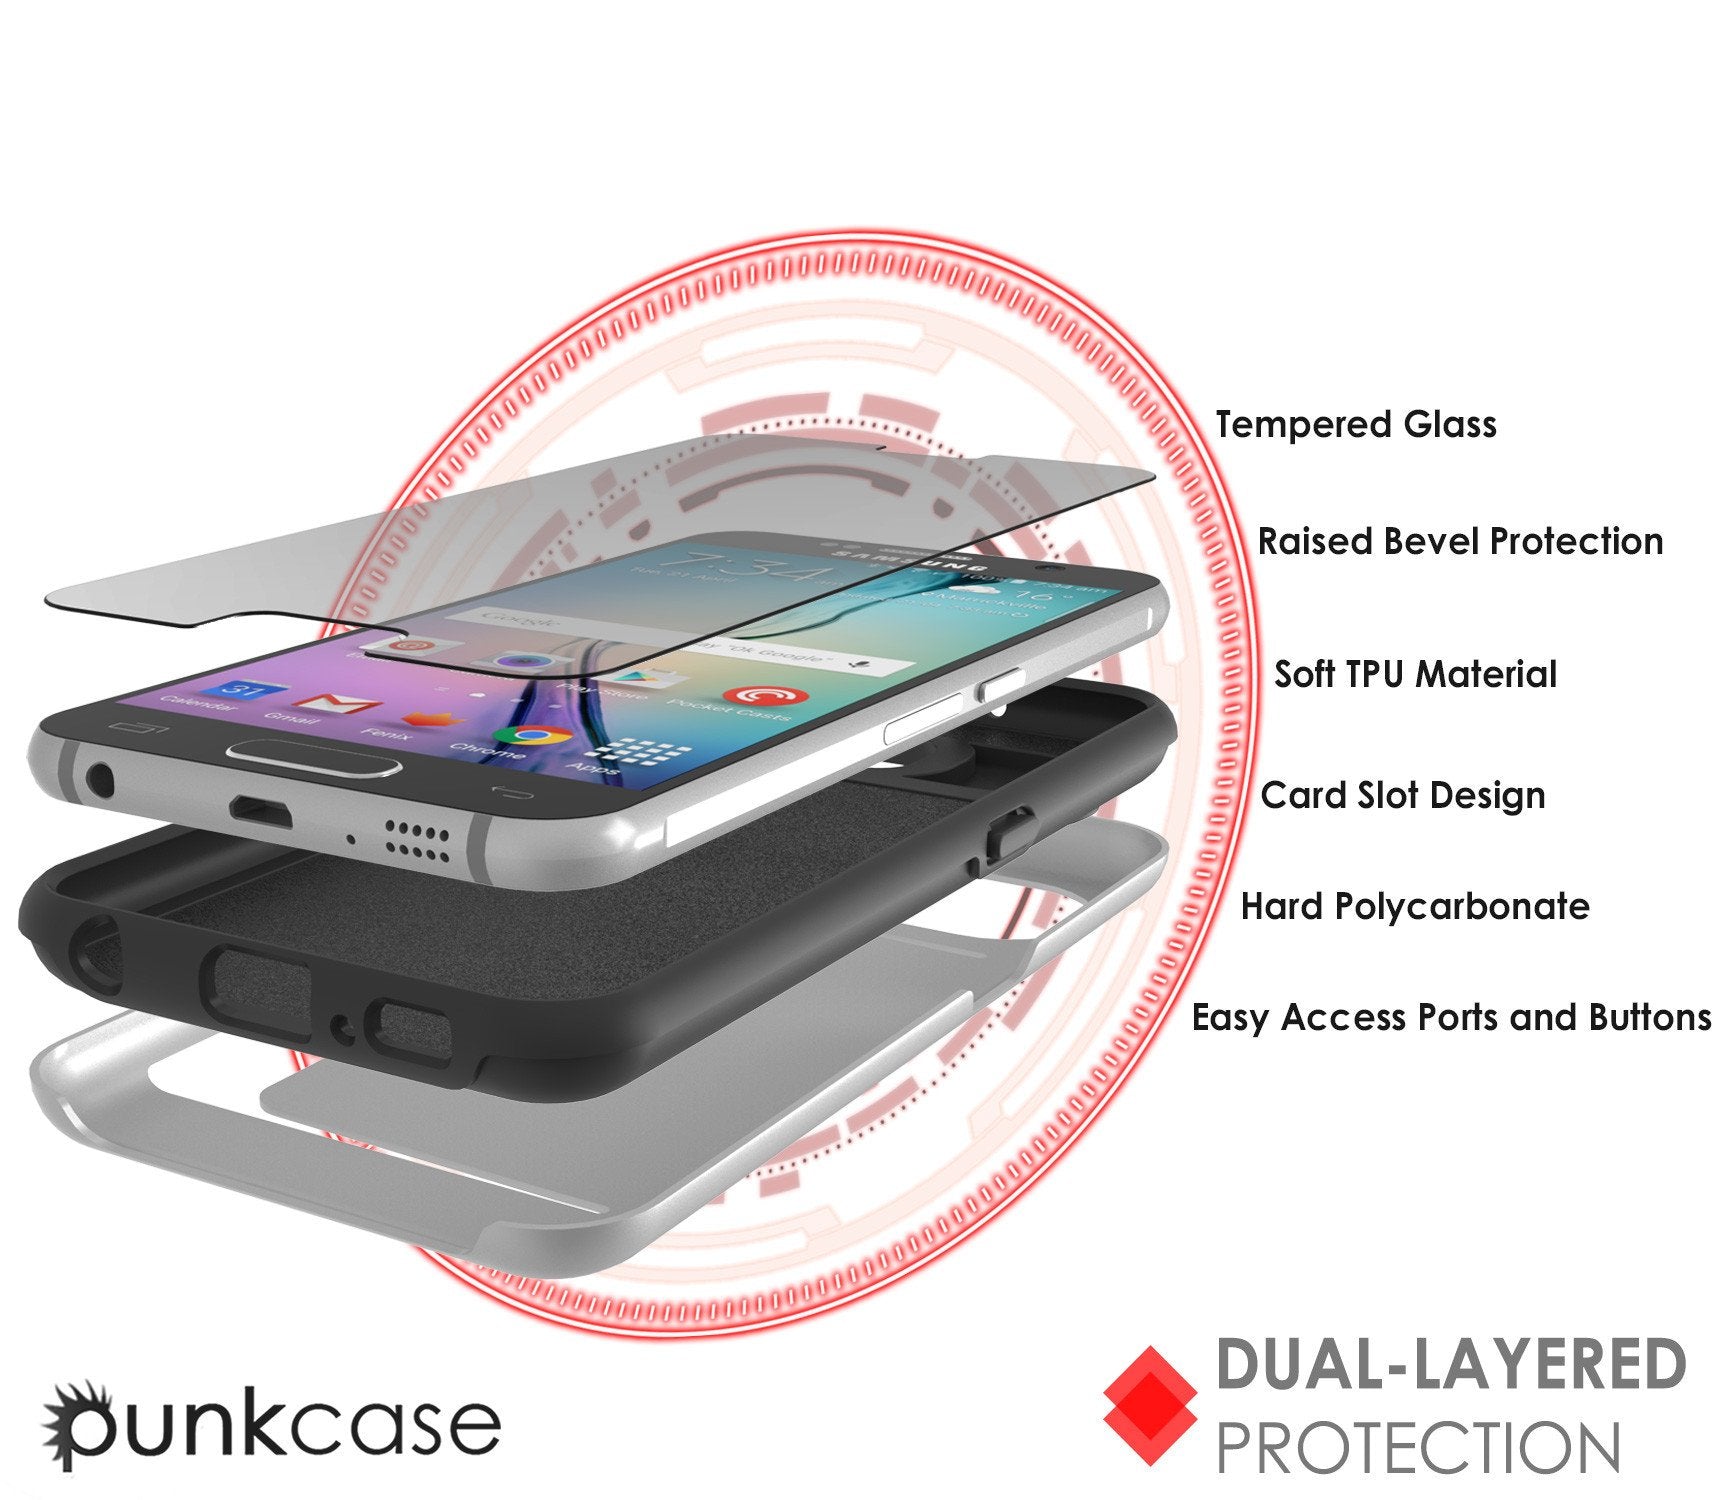 Galaxy S6 EDGE Plus Case PunkCase CLUTCH Silver Series Slim Armor Soft Cover w/ Screen Protector - PunkCase NZ